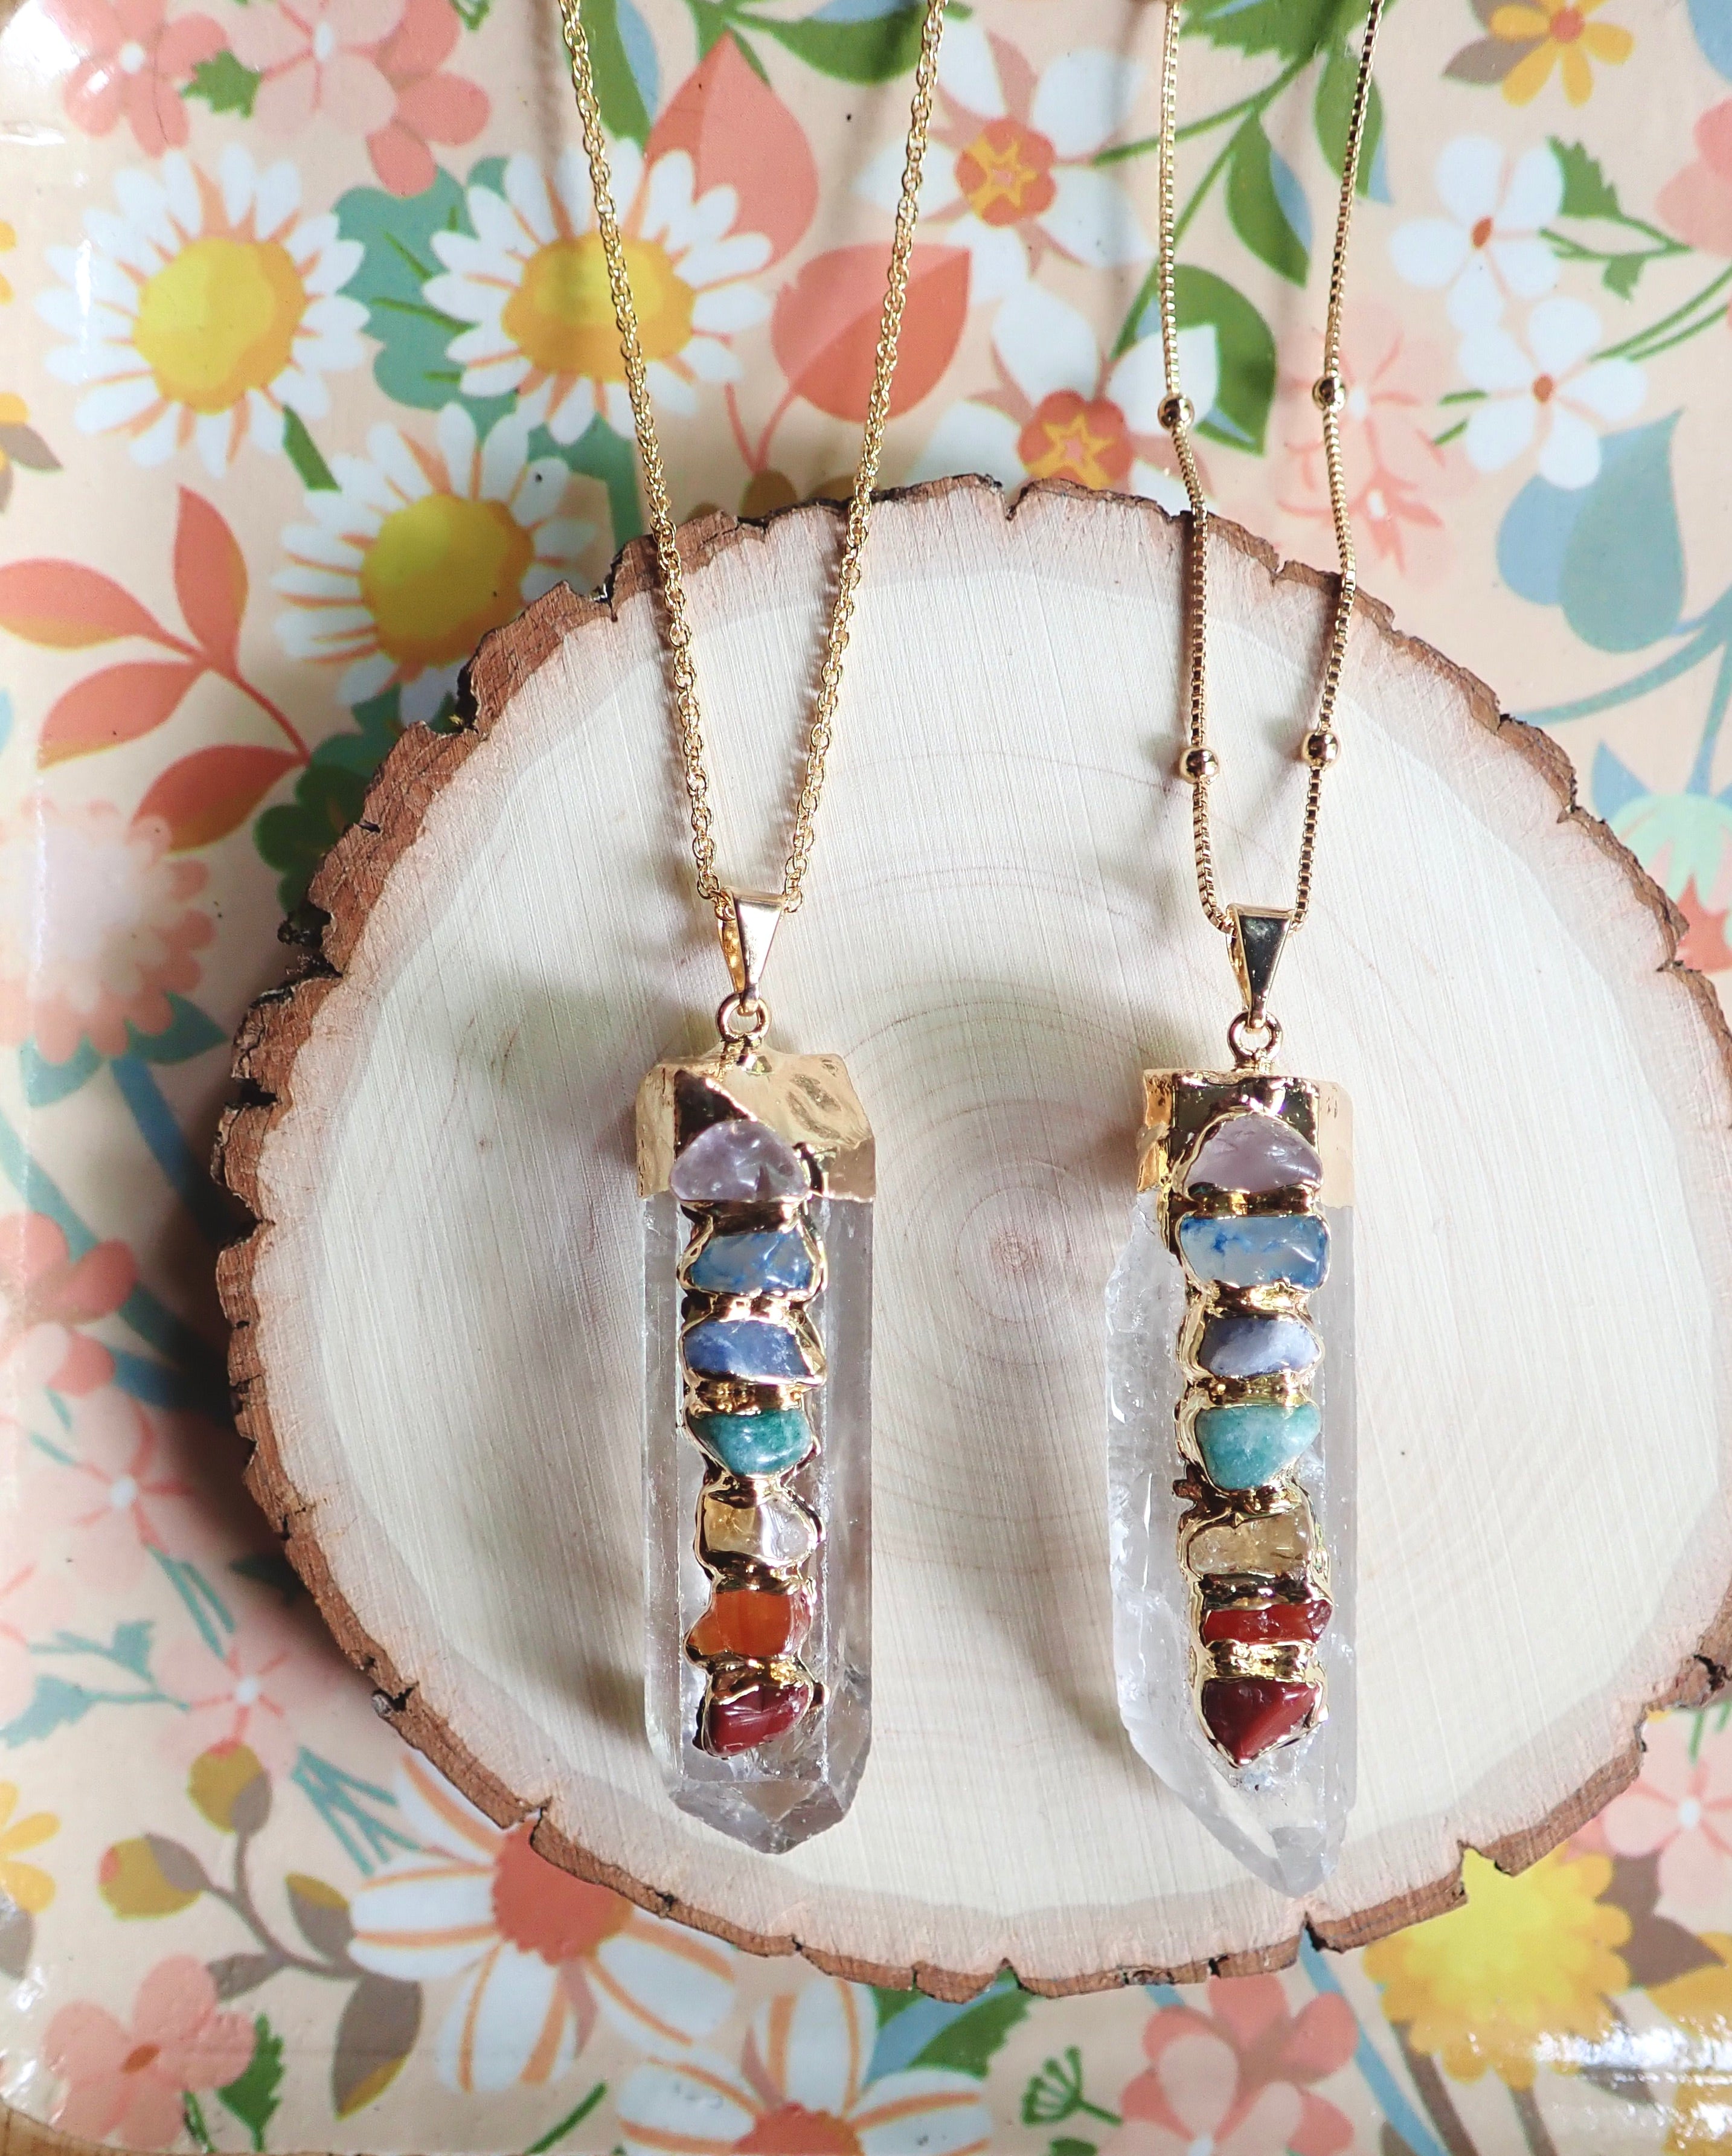 7 Chakra Healing Crystals Necklace Pendant Reiki Energy Pendulum Women  Jewelry | eBay